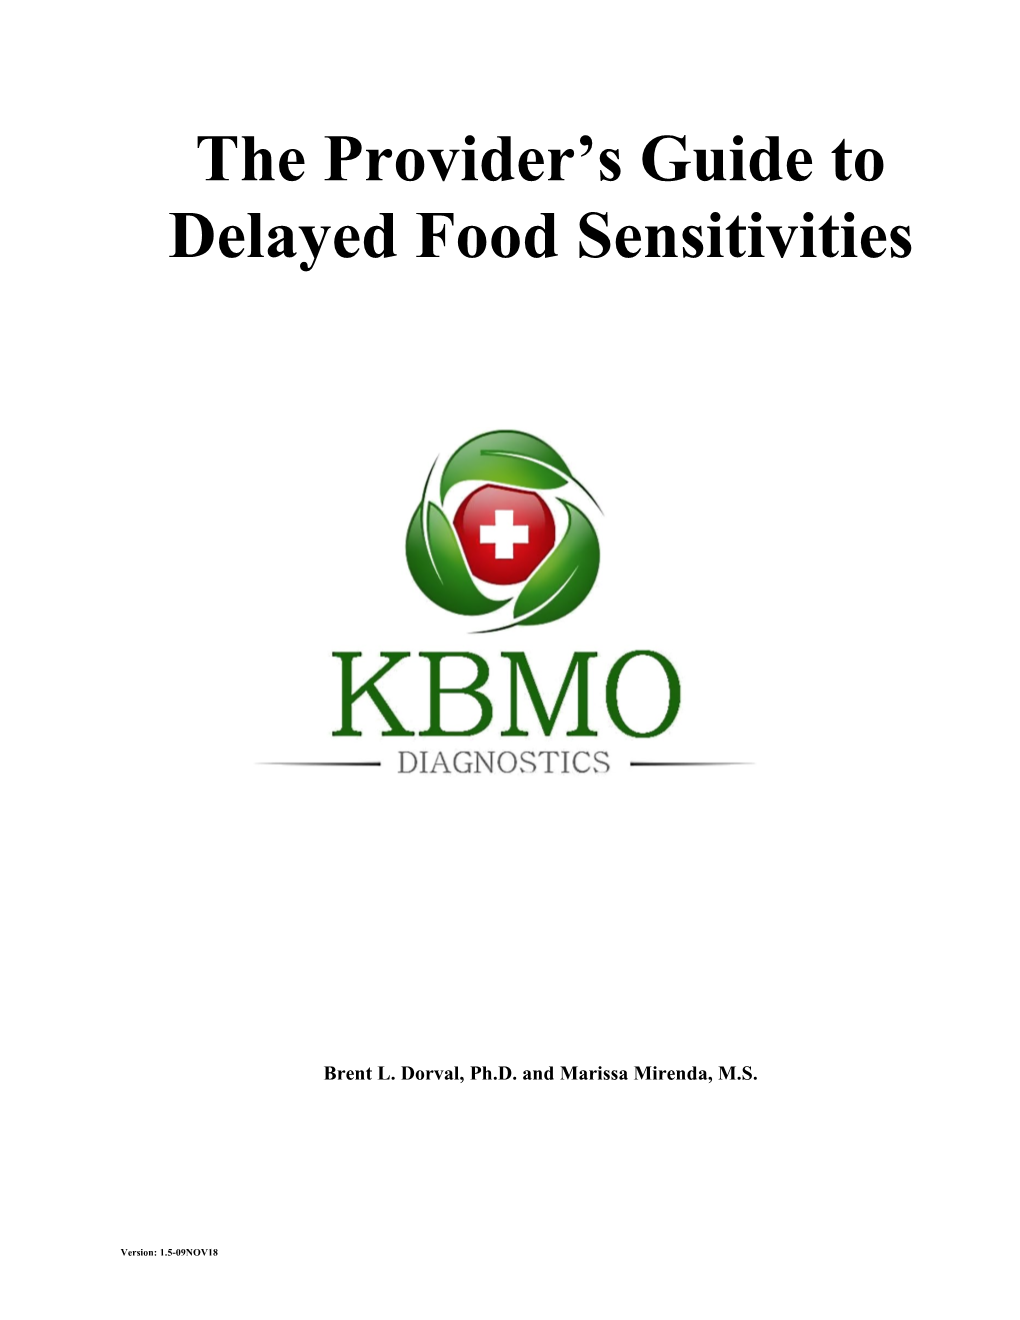 Food Sensitivity Testing Results